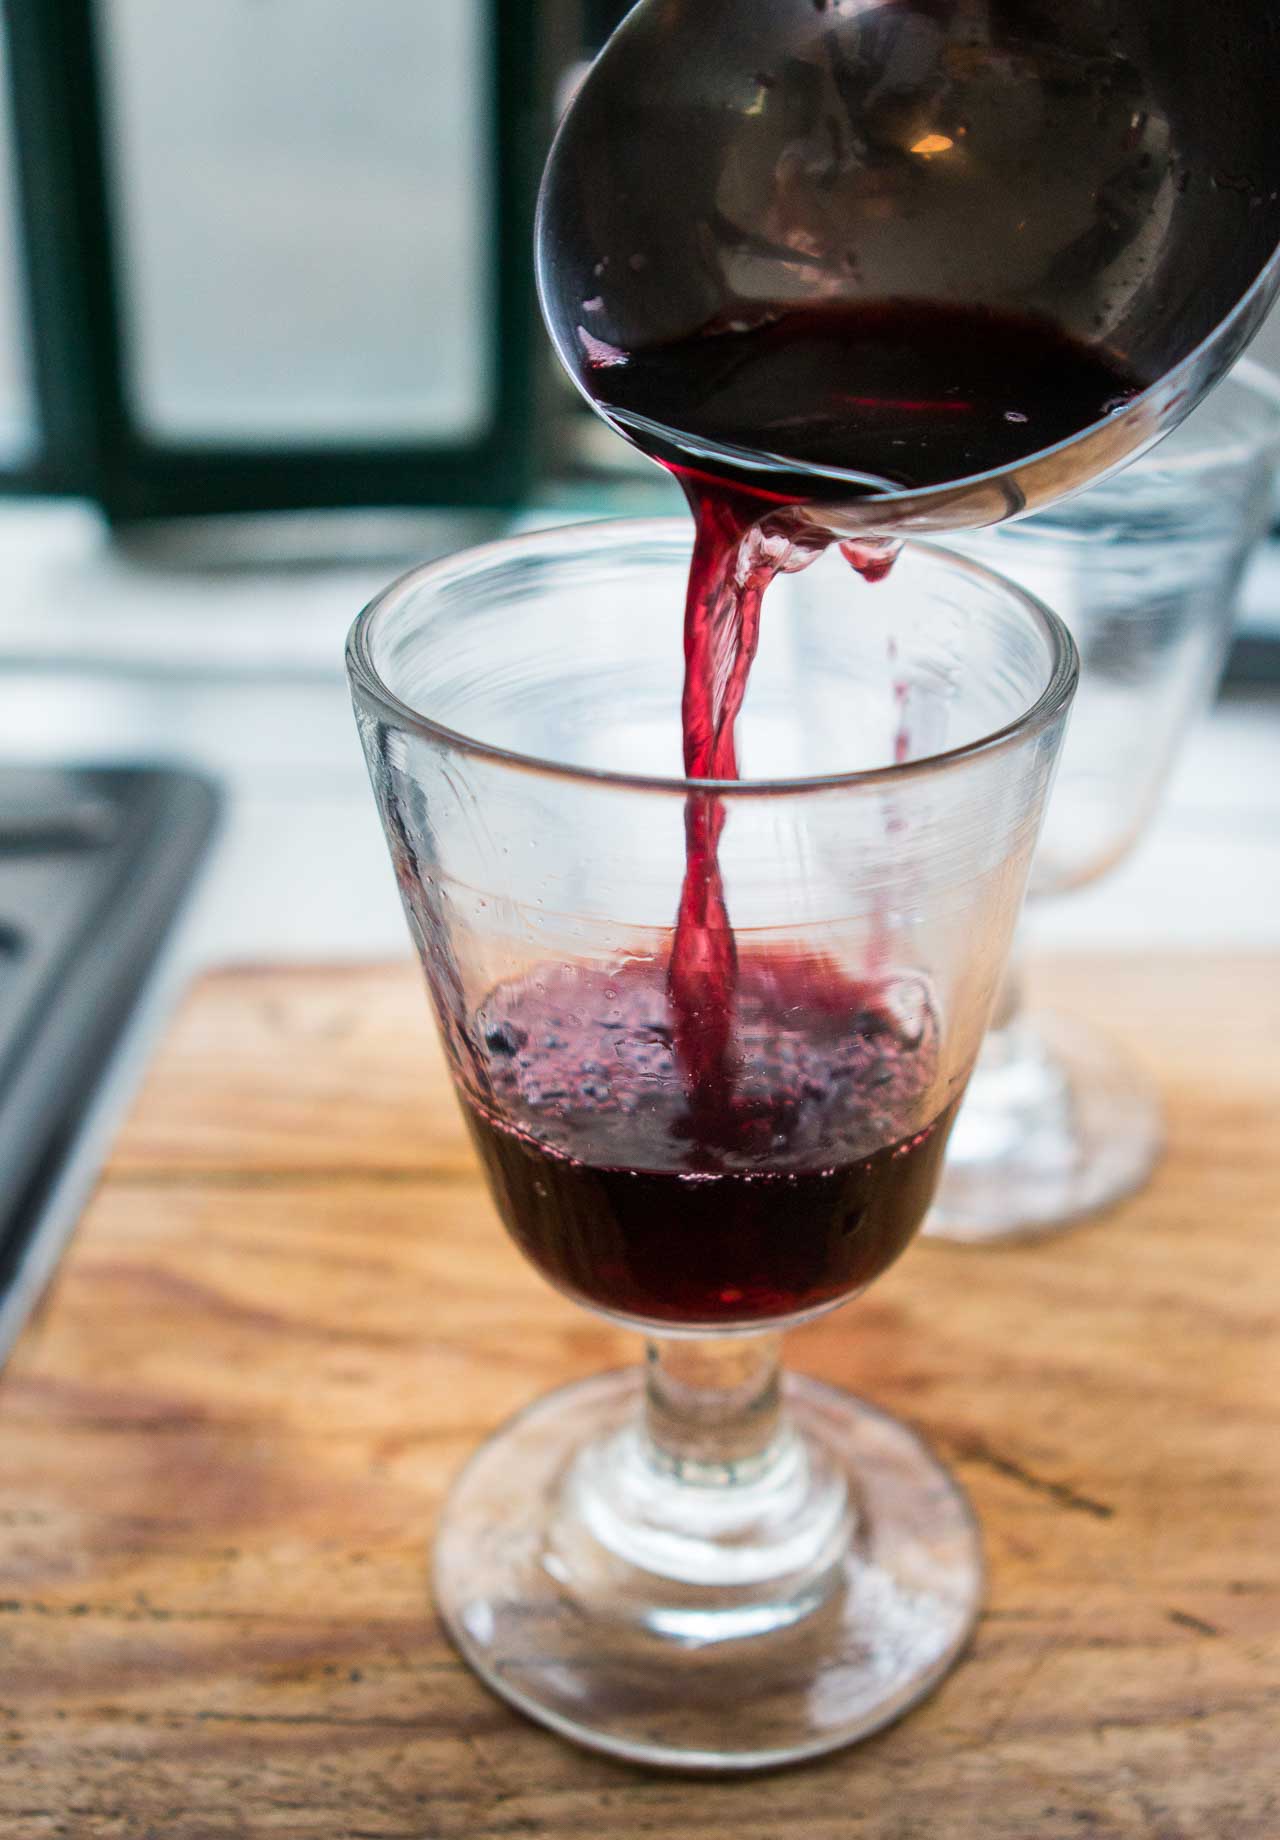 https://www.davidlebovitz.com/wp-content/uploads/2012/12/vin-chaud-mulled-wine-recipe.jpg